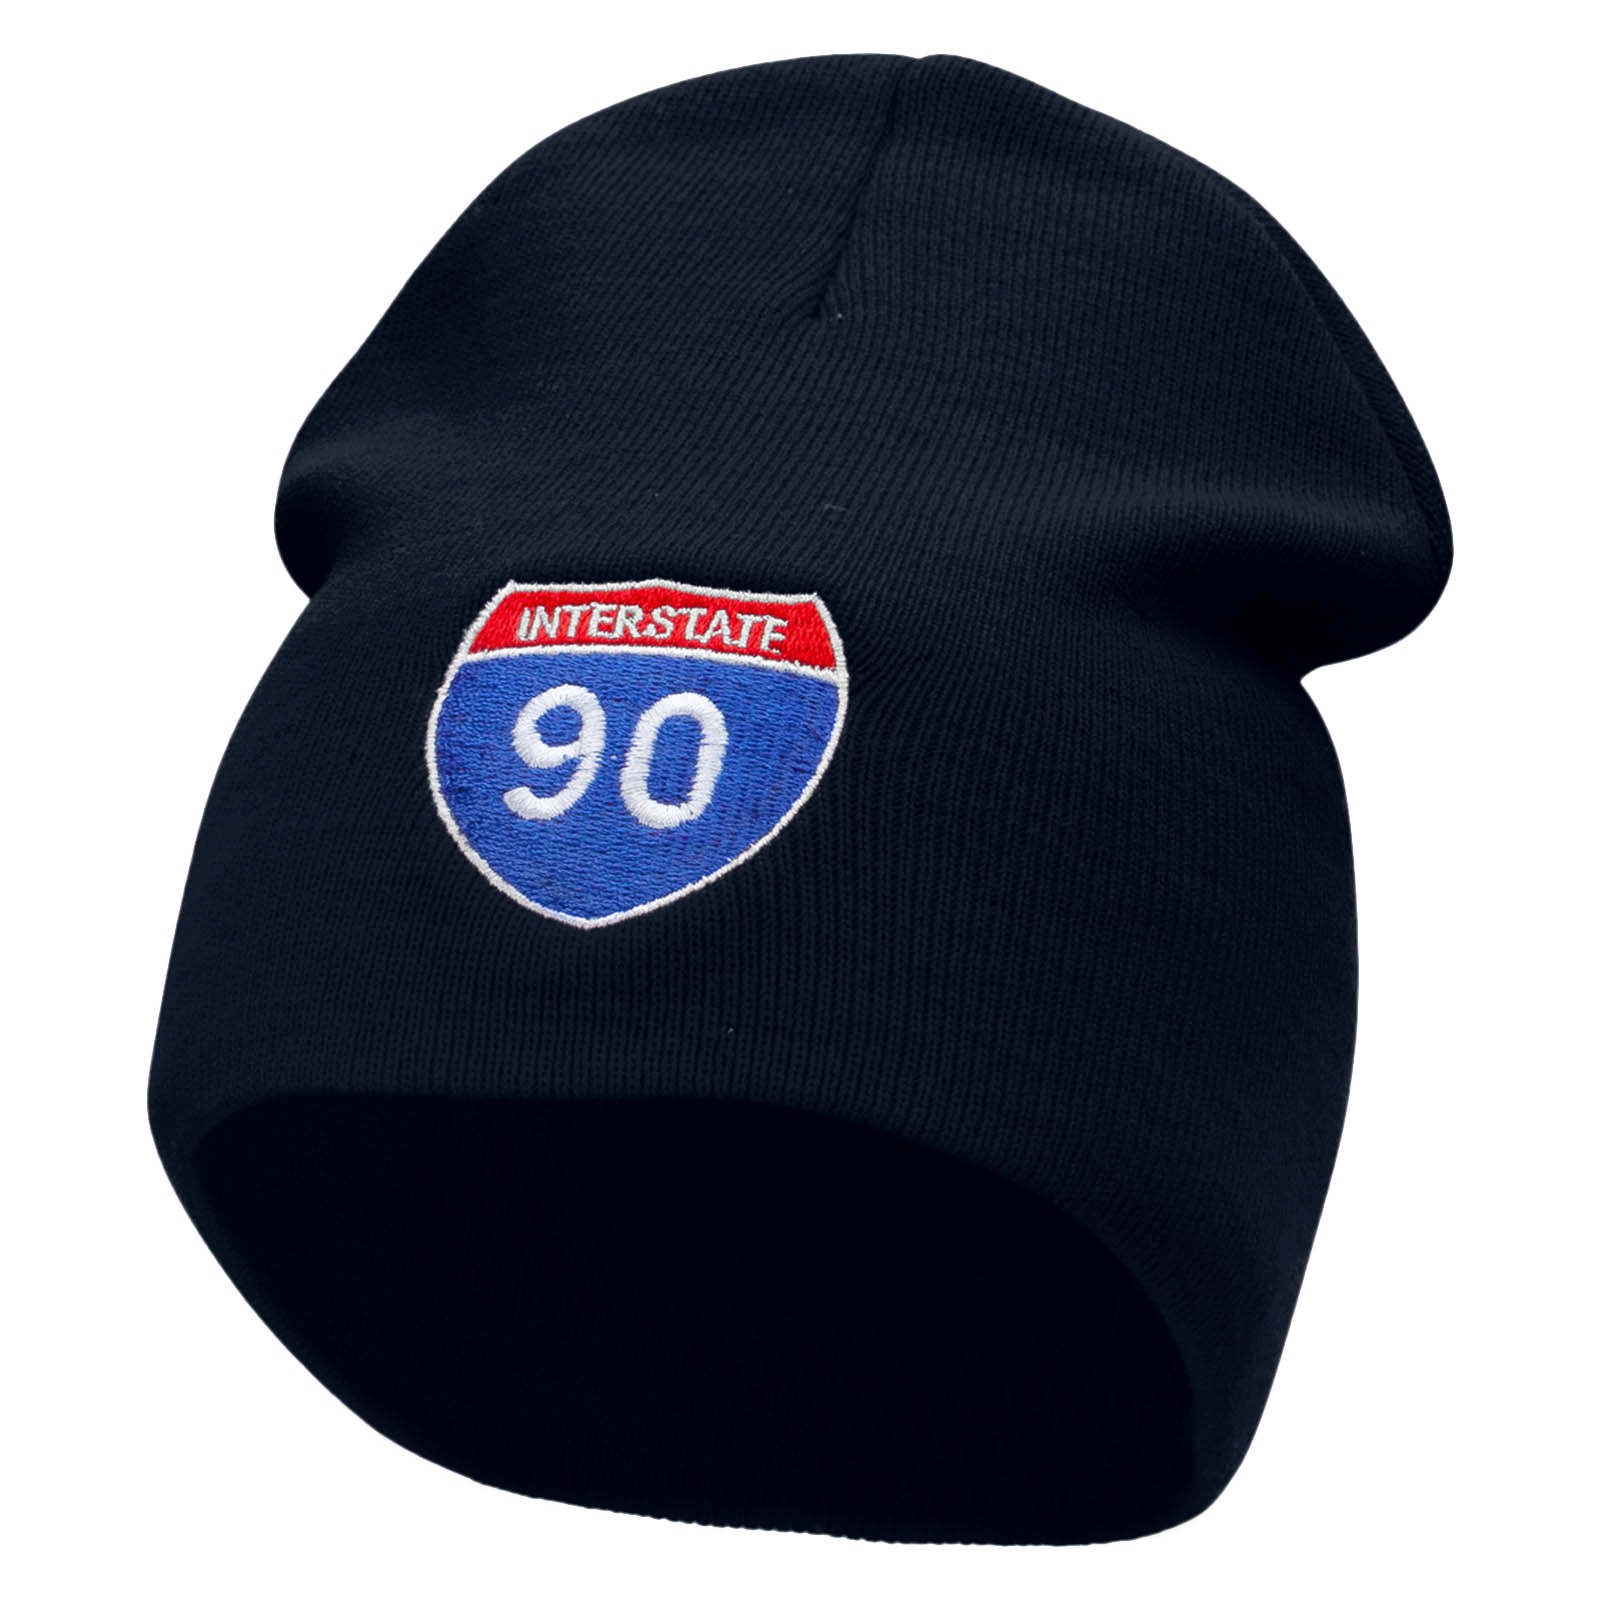 Interstate Freeway 90 Embroidered 8 Inch Short Beanie - Navy OSFM